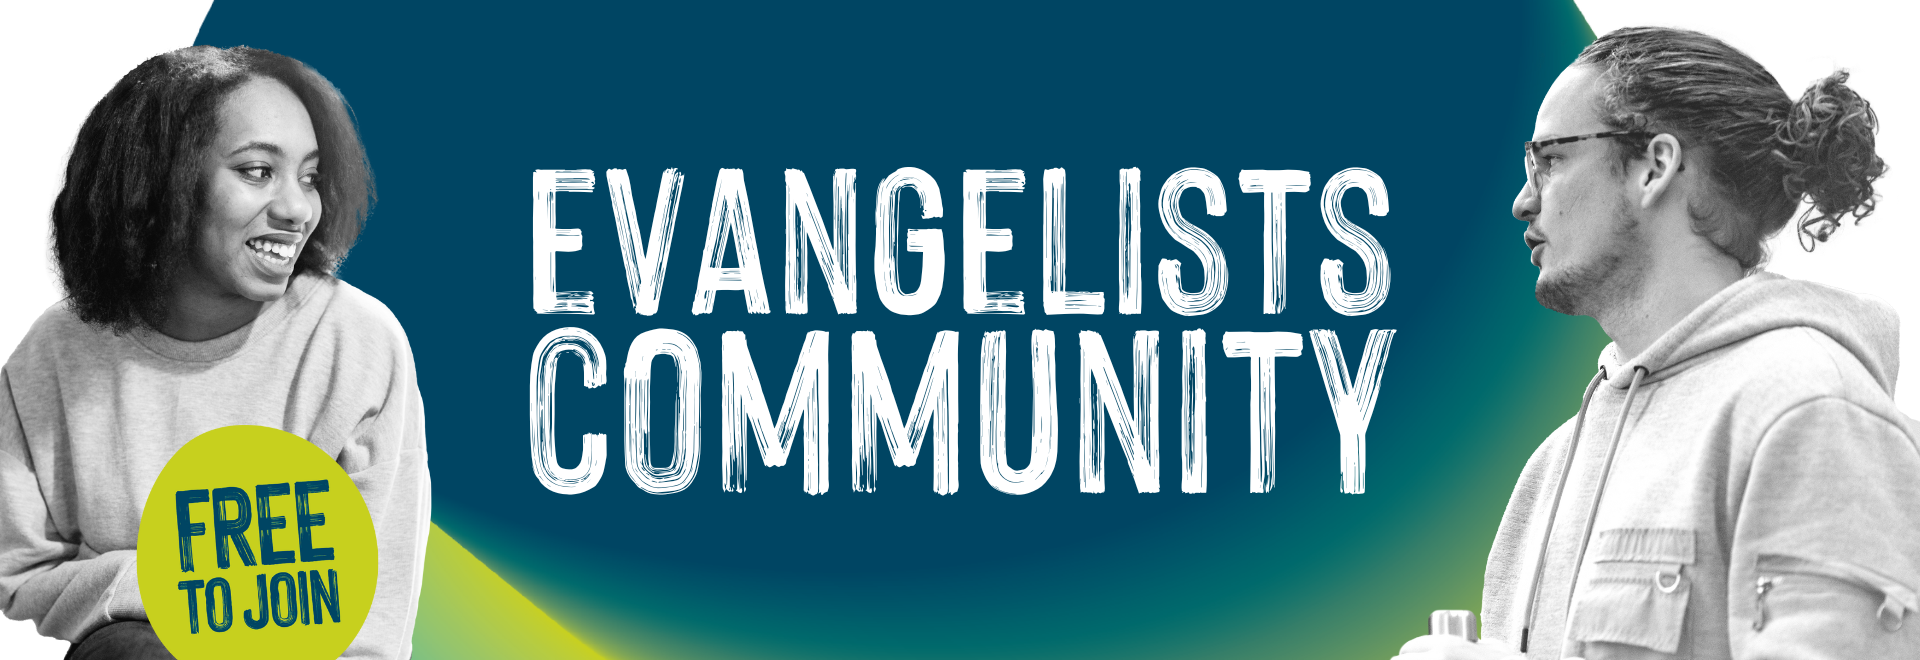 ELIM EVANGELISTS COMMUNITY HEA